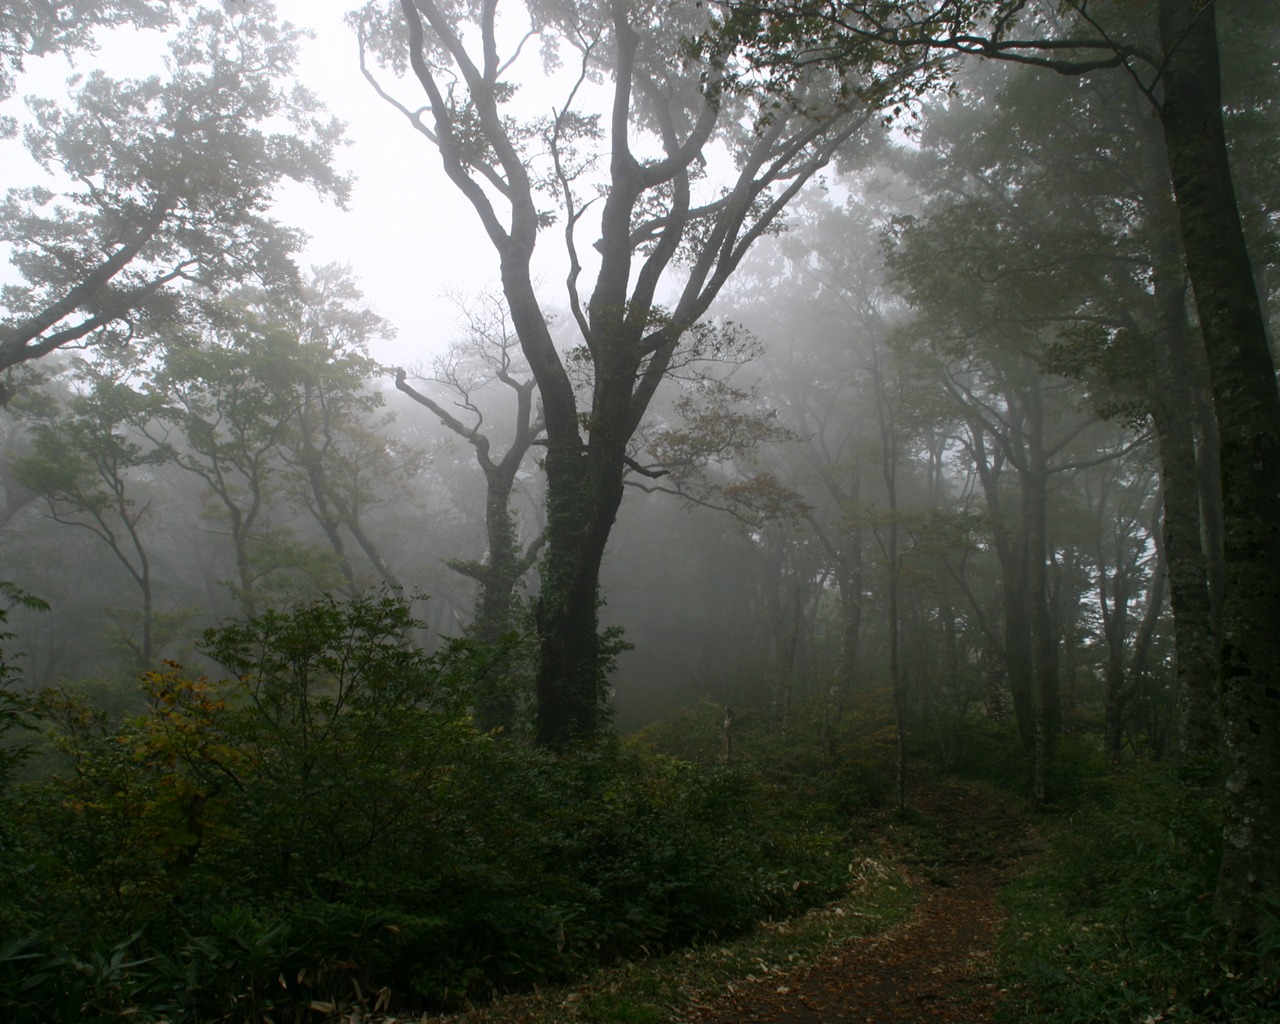 Foggy Forest Wallpaper Landscape Nature In Jpg Format For